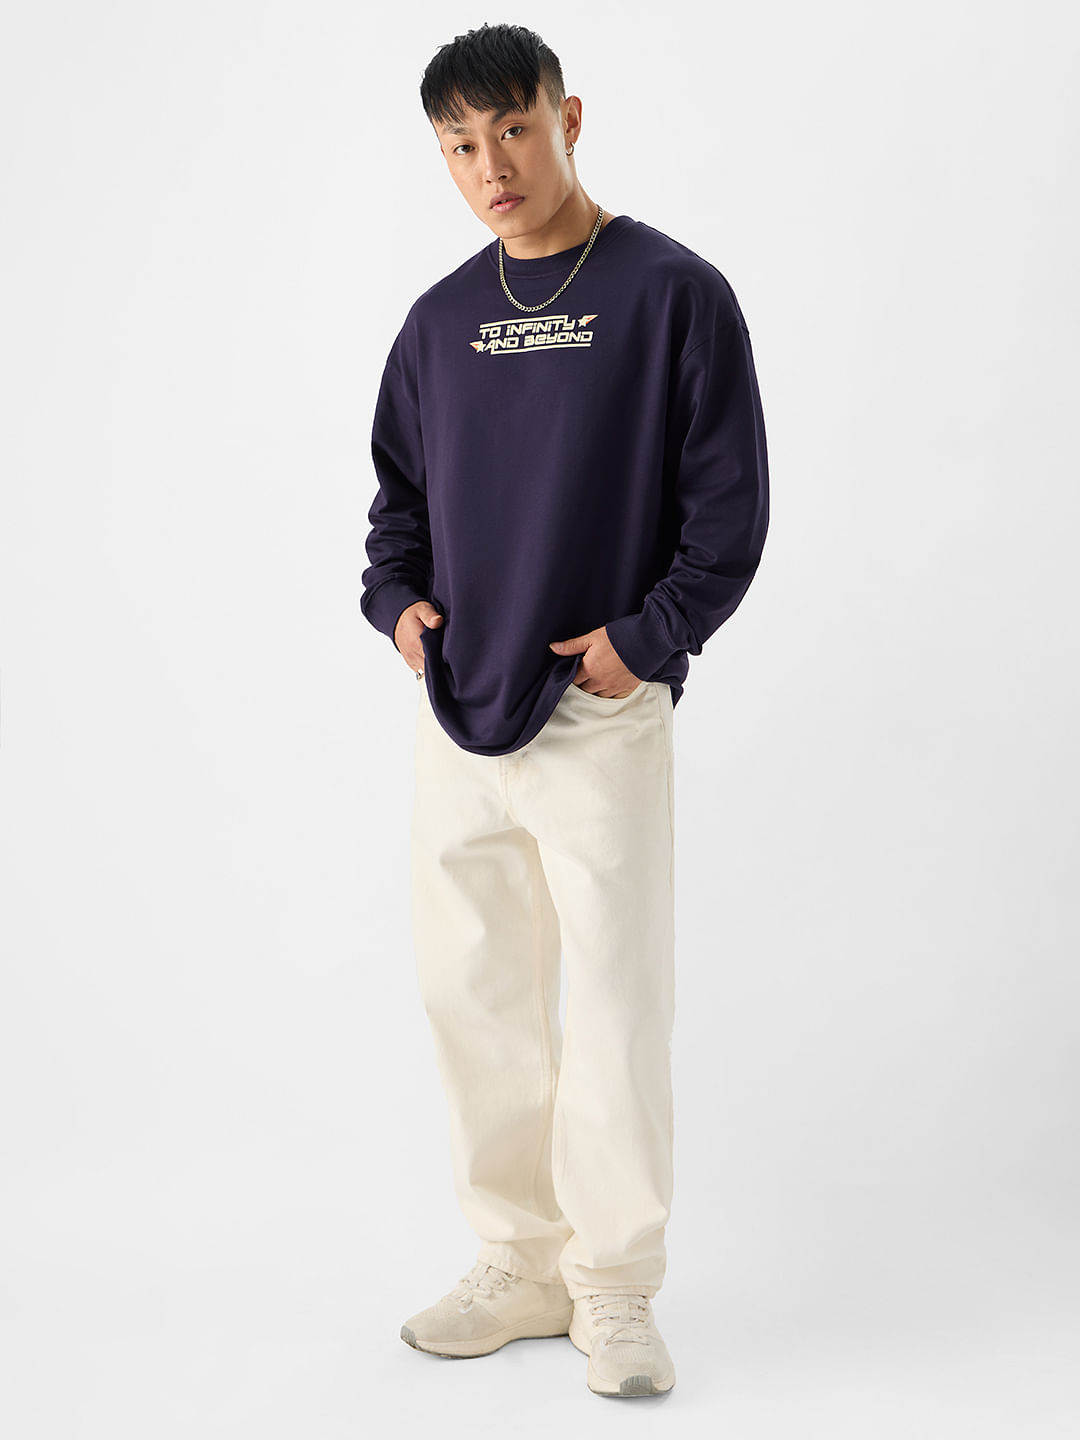 Buy Disney: Buzz Lightyear Oversized Full Sleeve T-Shirt Online